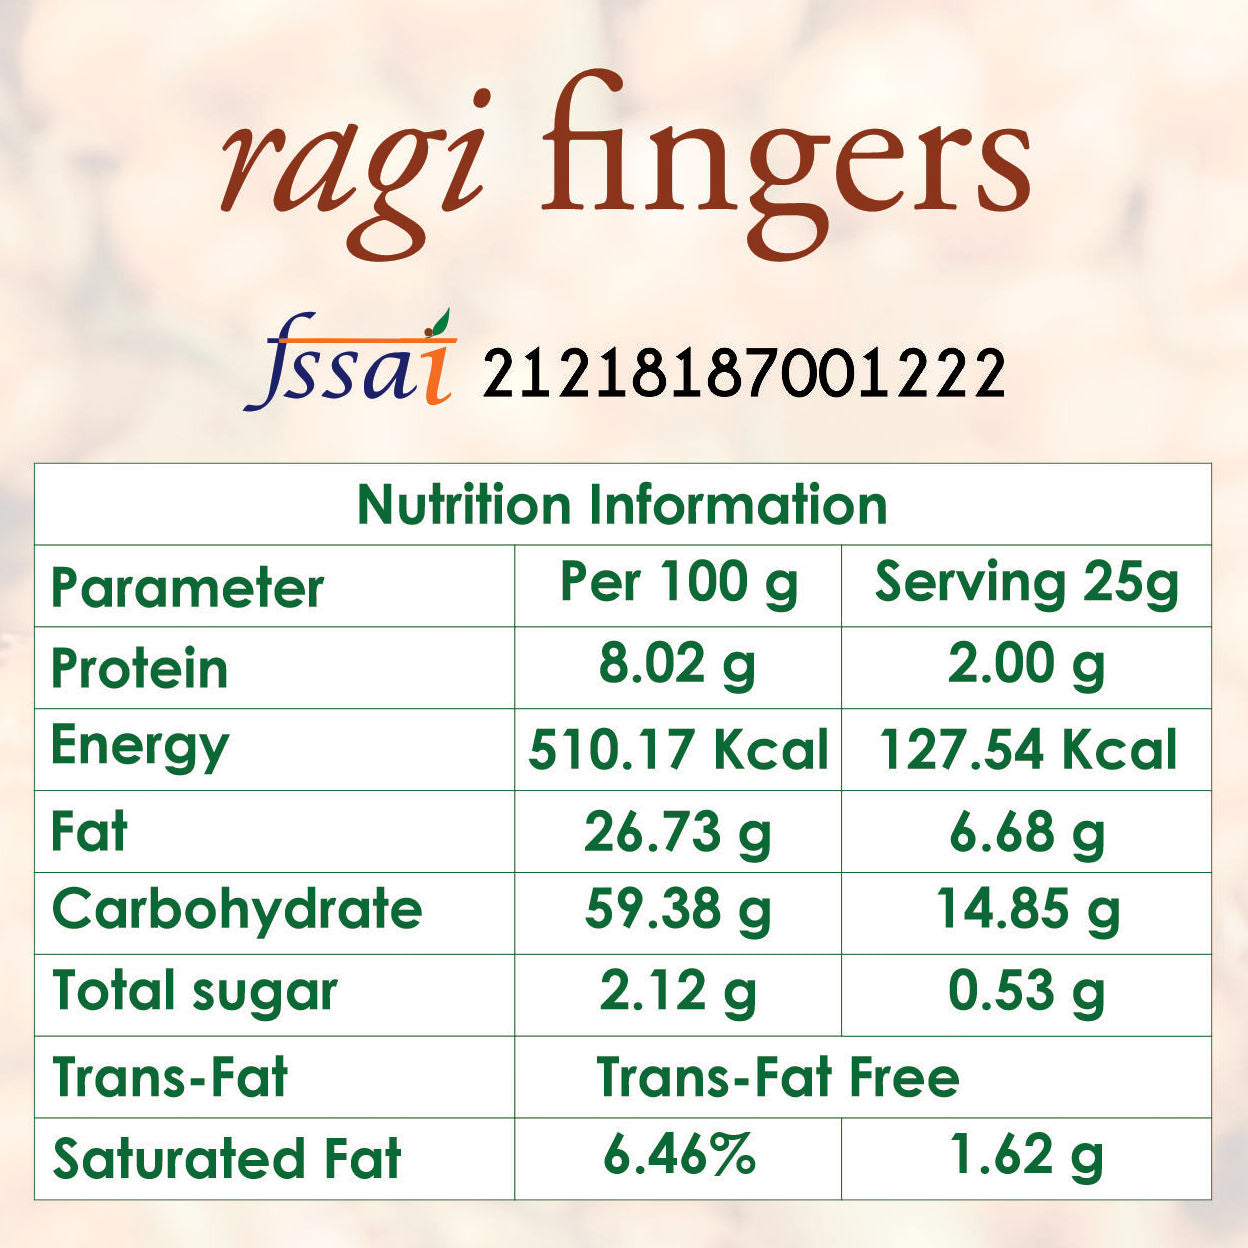 ragi fingers nutrition